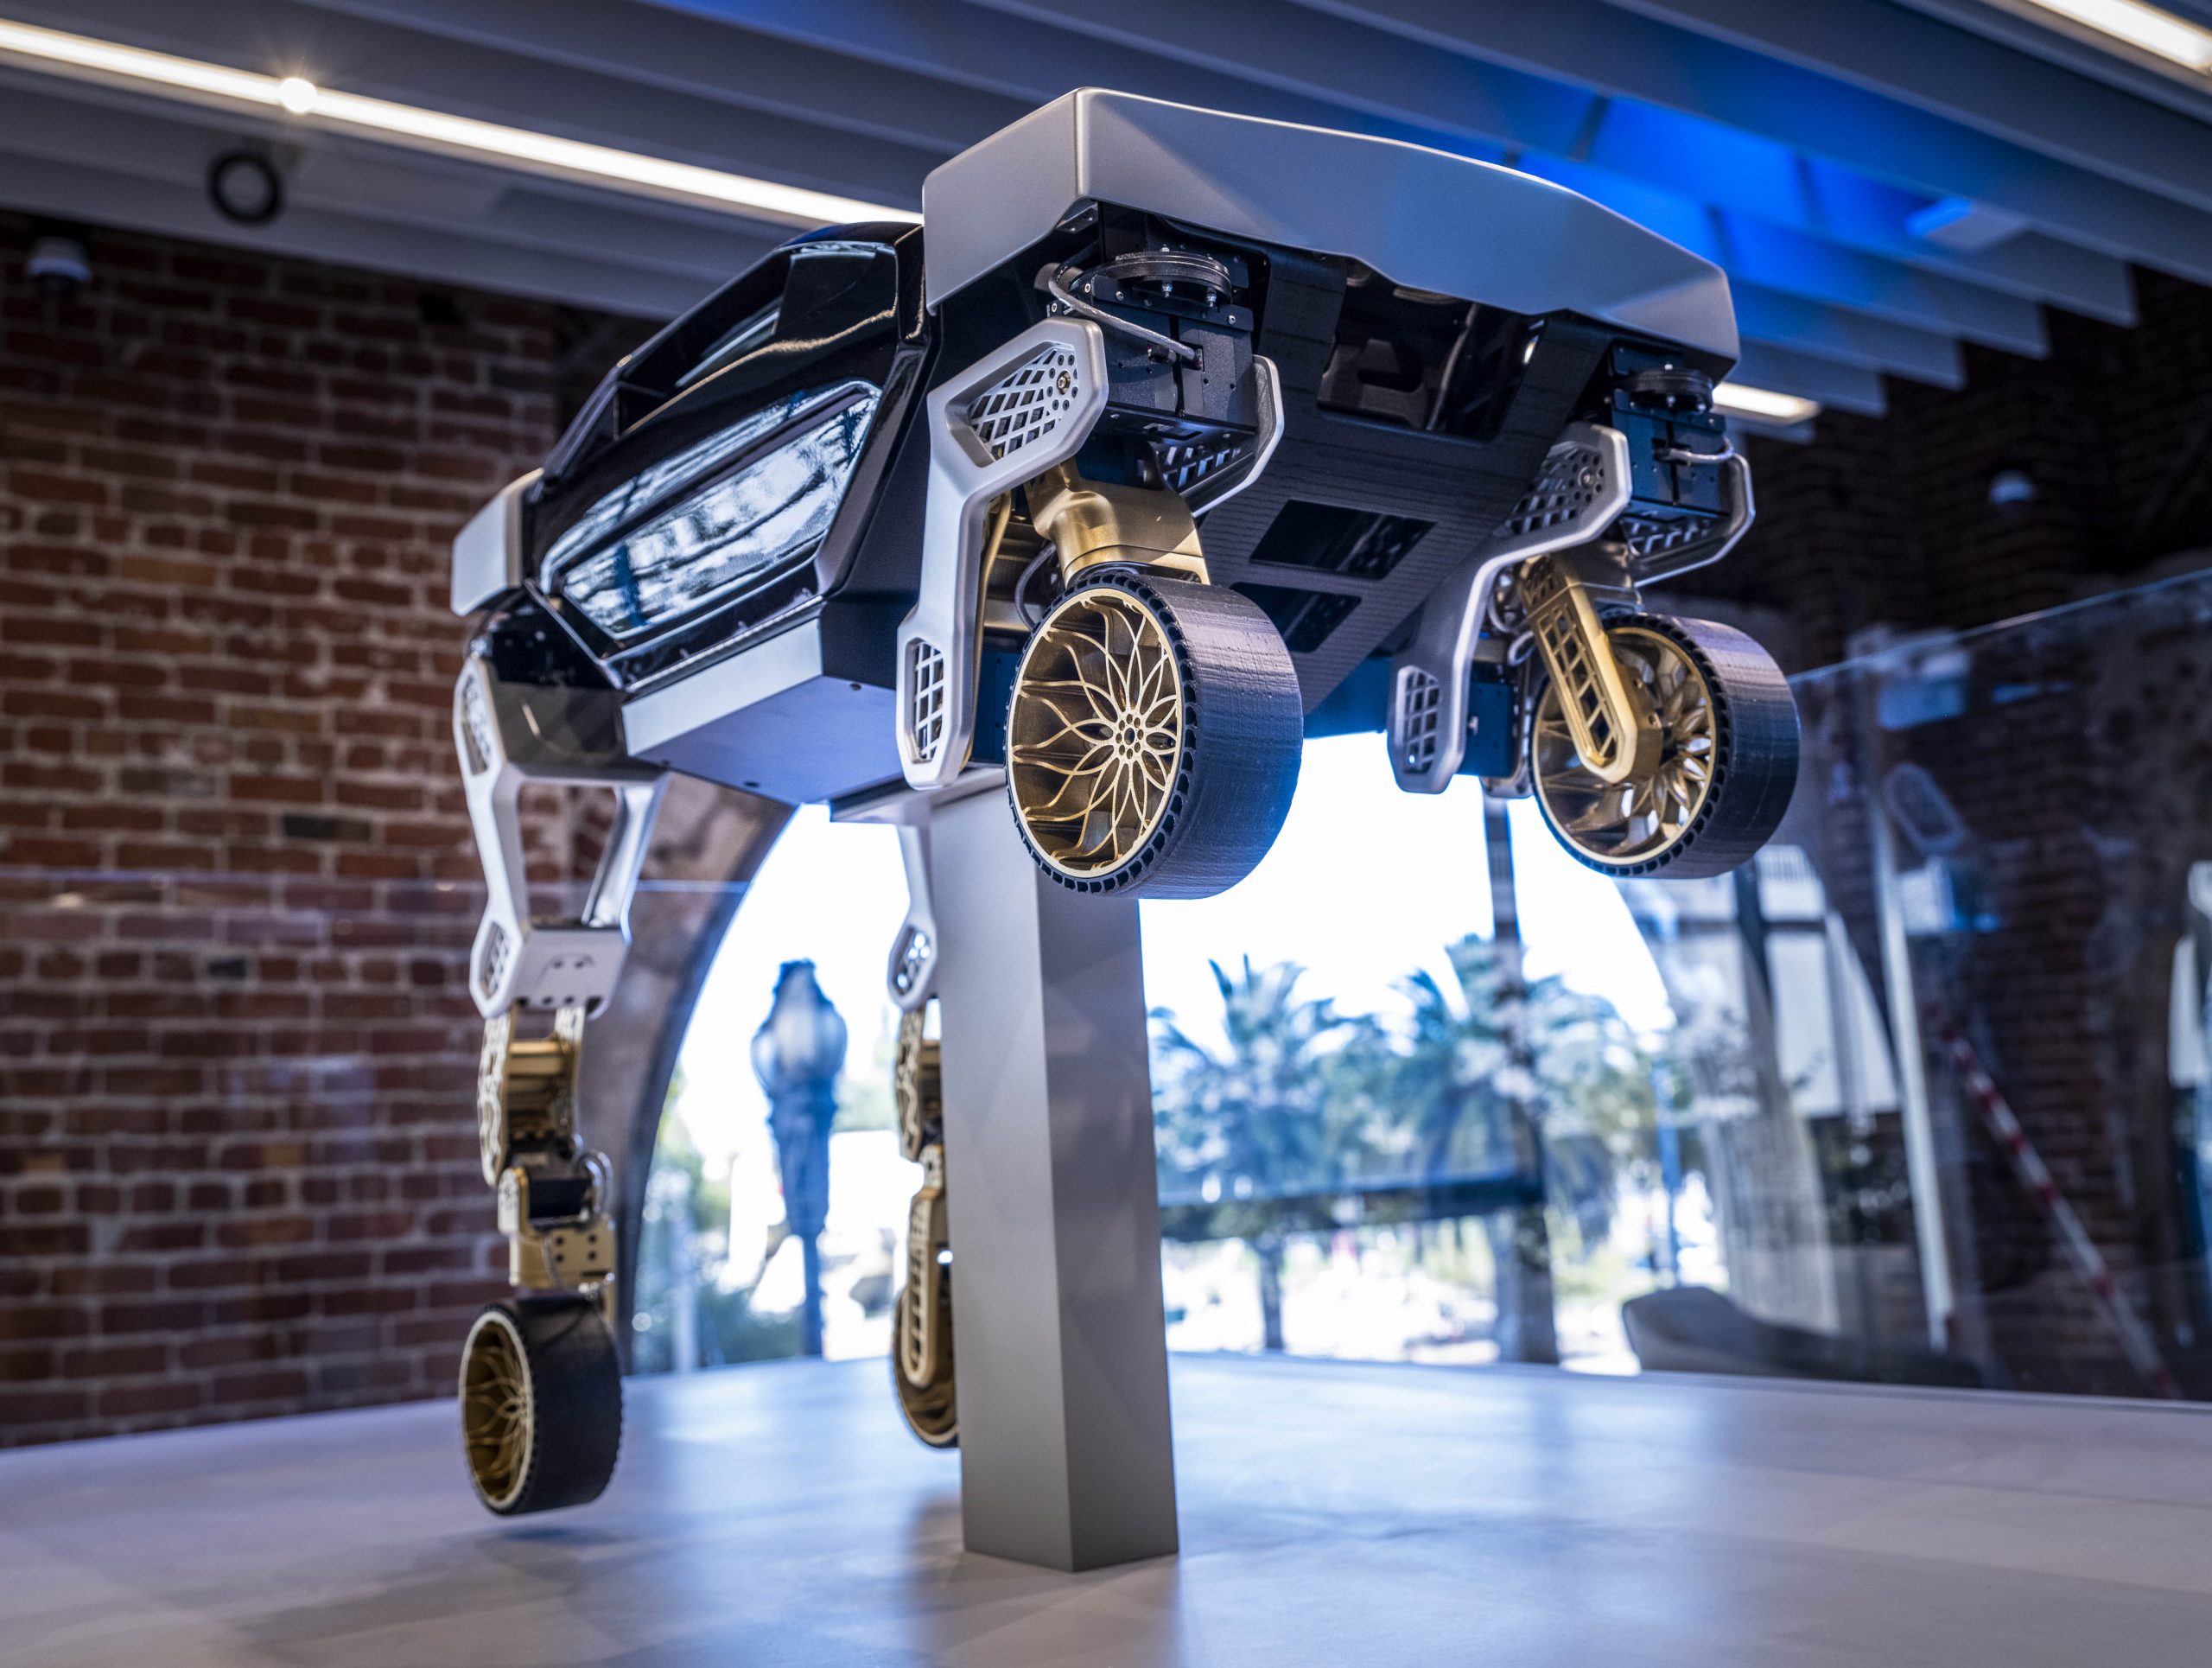 Hyundai exhibit in the reimagined Autodesk Gallery in San Francisco, CA.